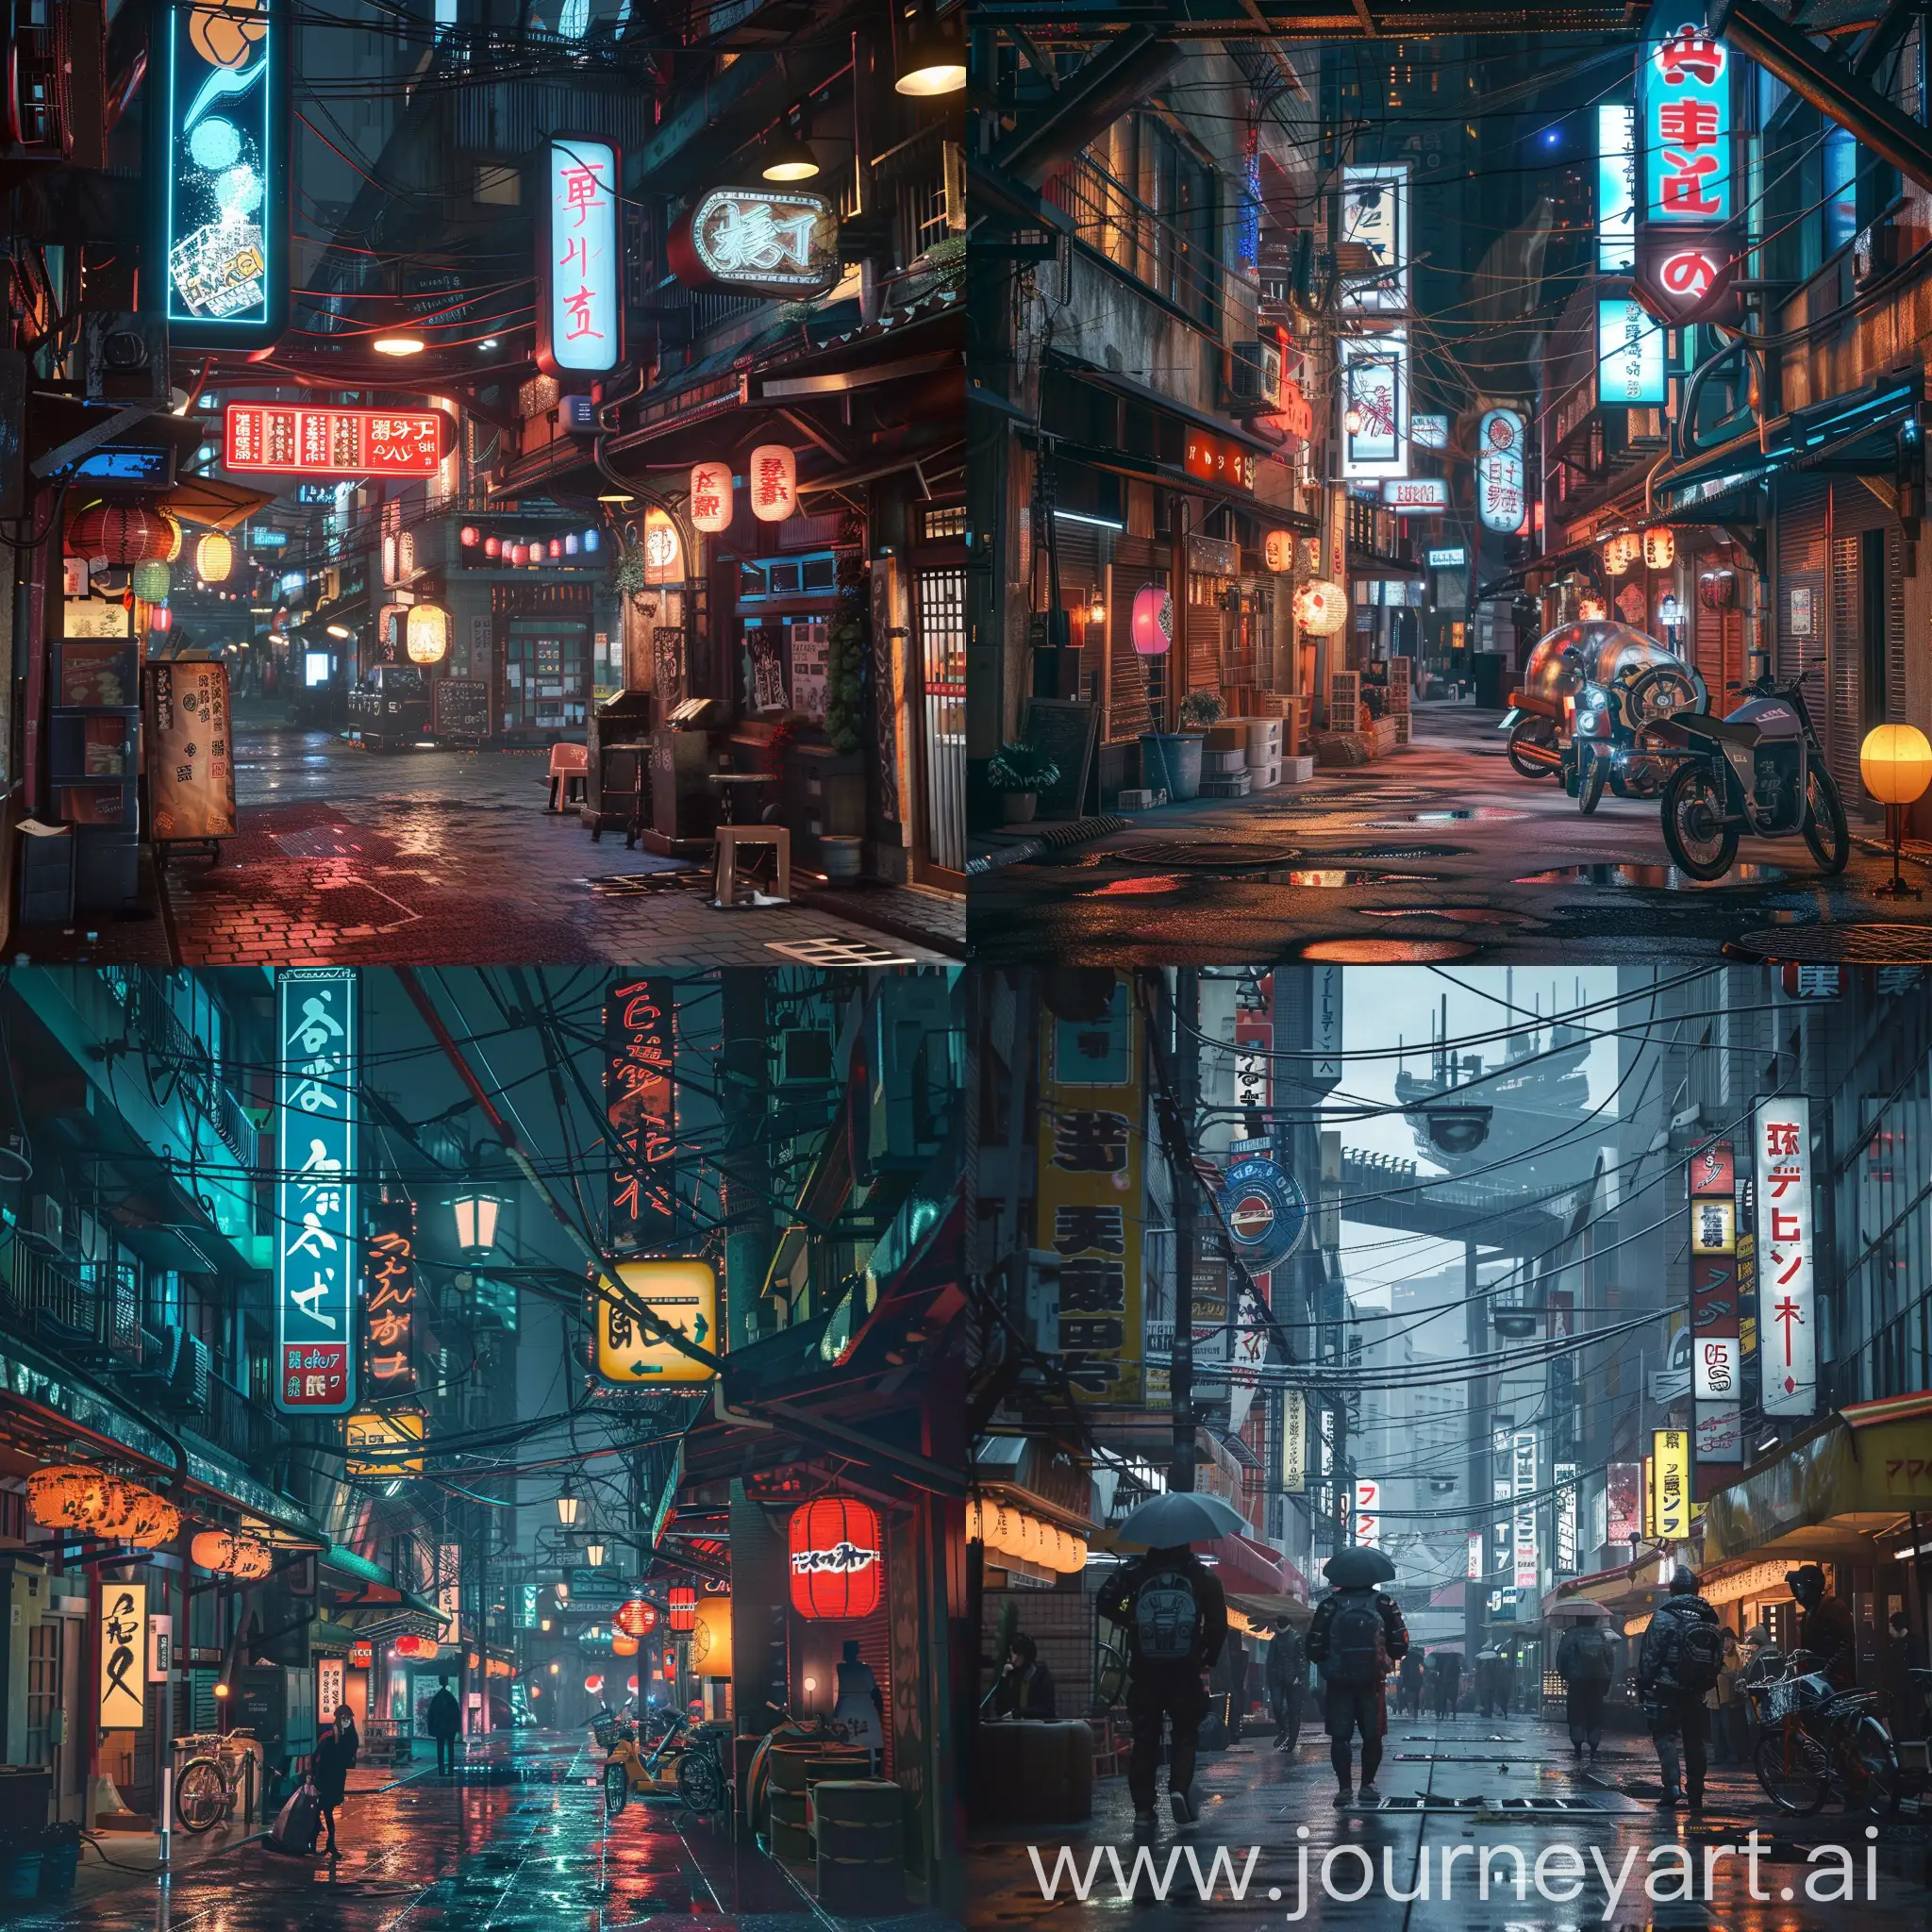 Futuristic-Cyberpunk-Scene-Vibrant-Edo-Old-City-Street-in-Japan